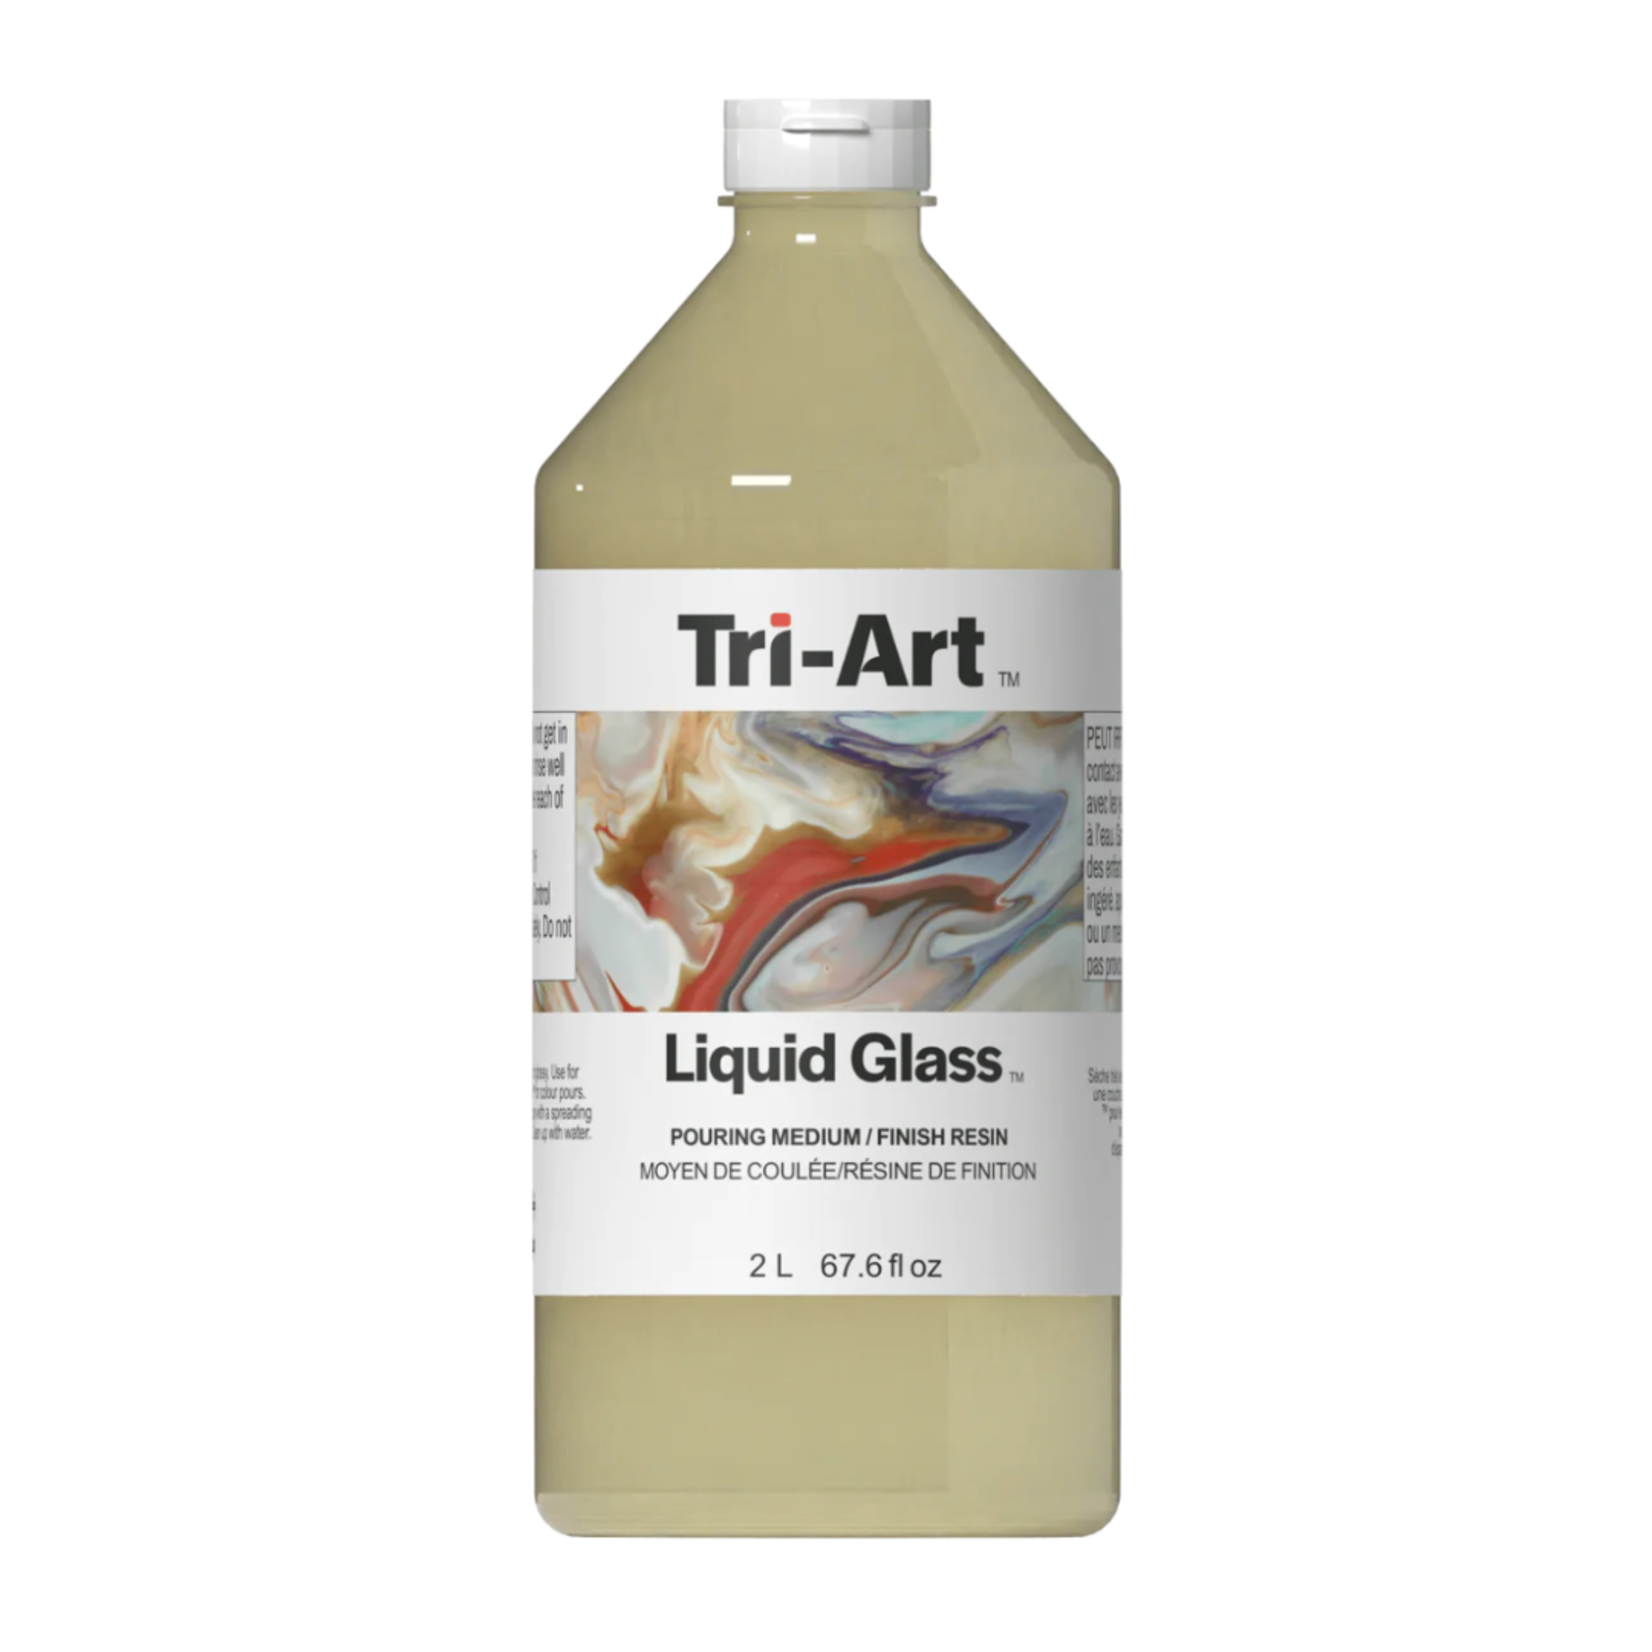 TRI ART TRI-ART LIQUID GLASS POURING MEDIUM 2L